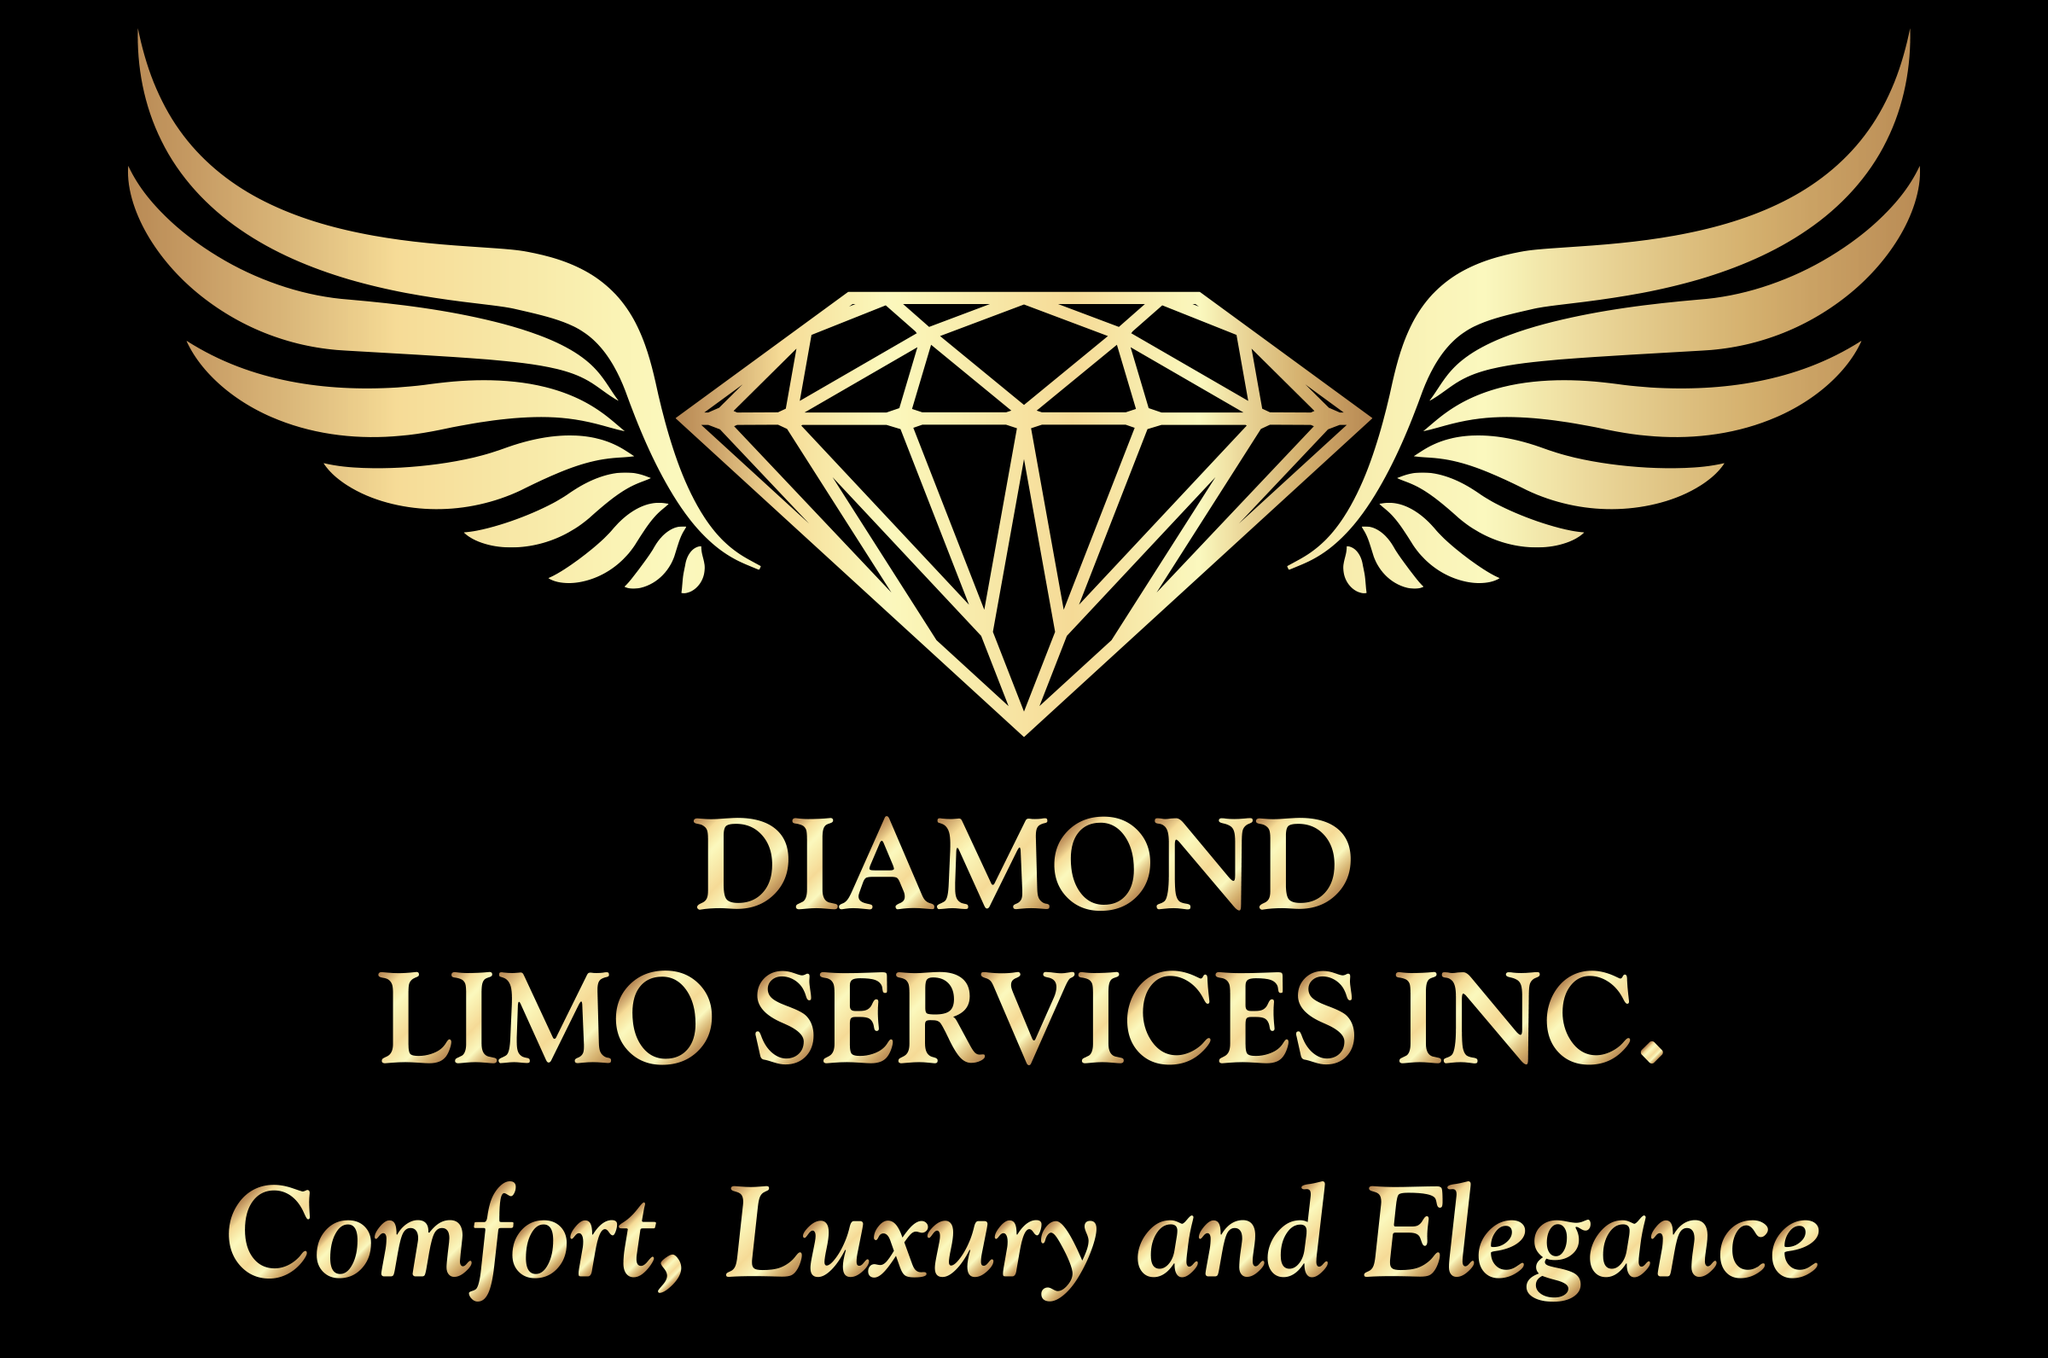 Diamond Limo Services